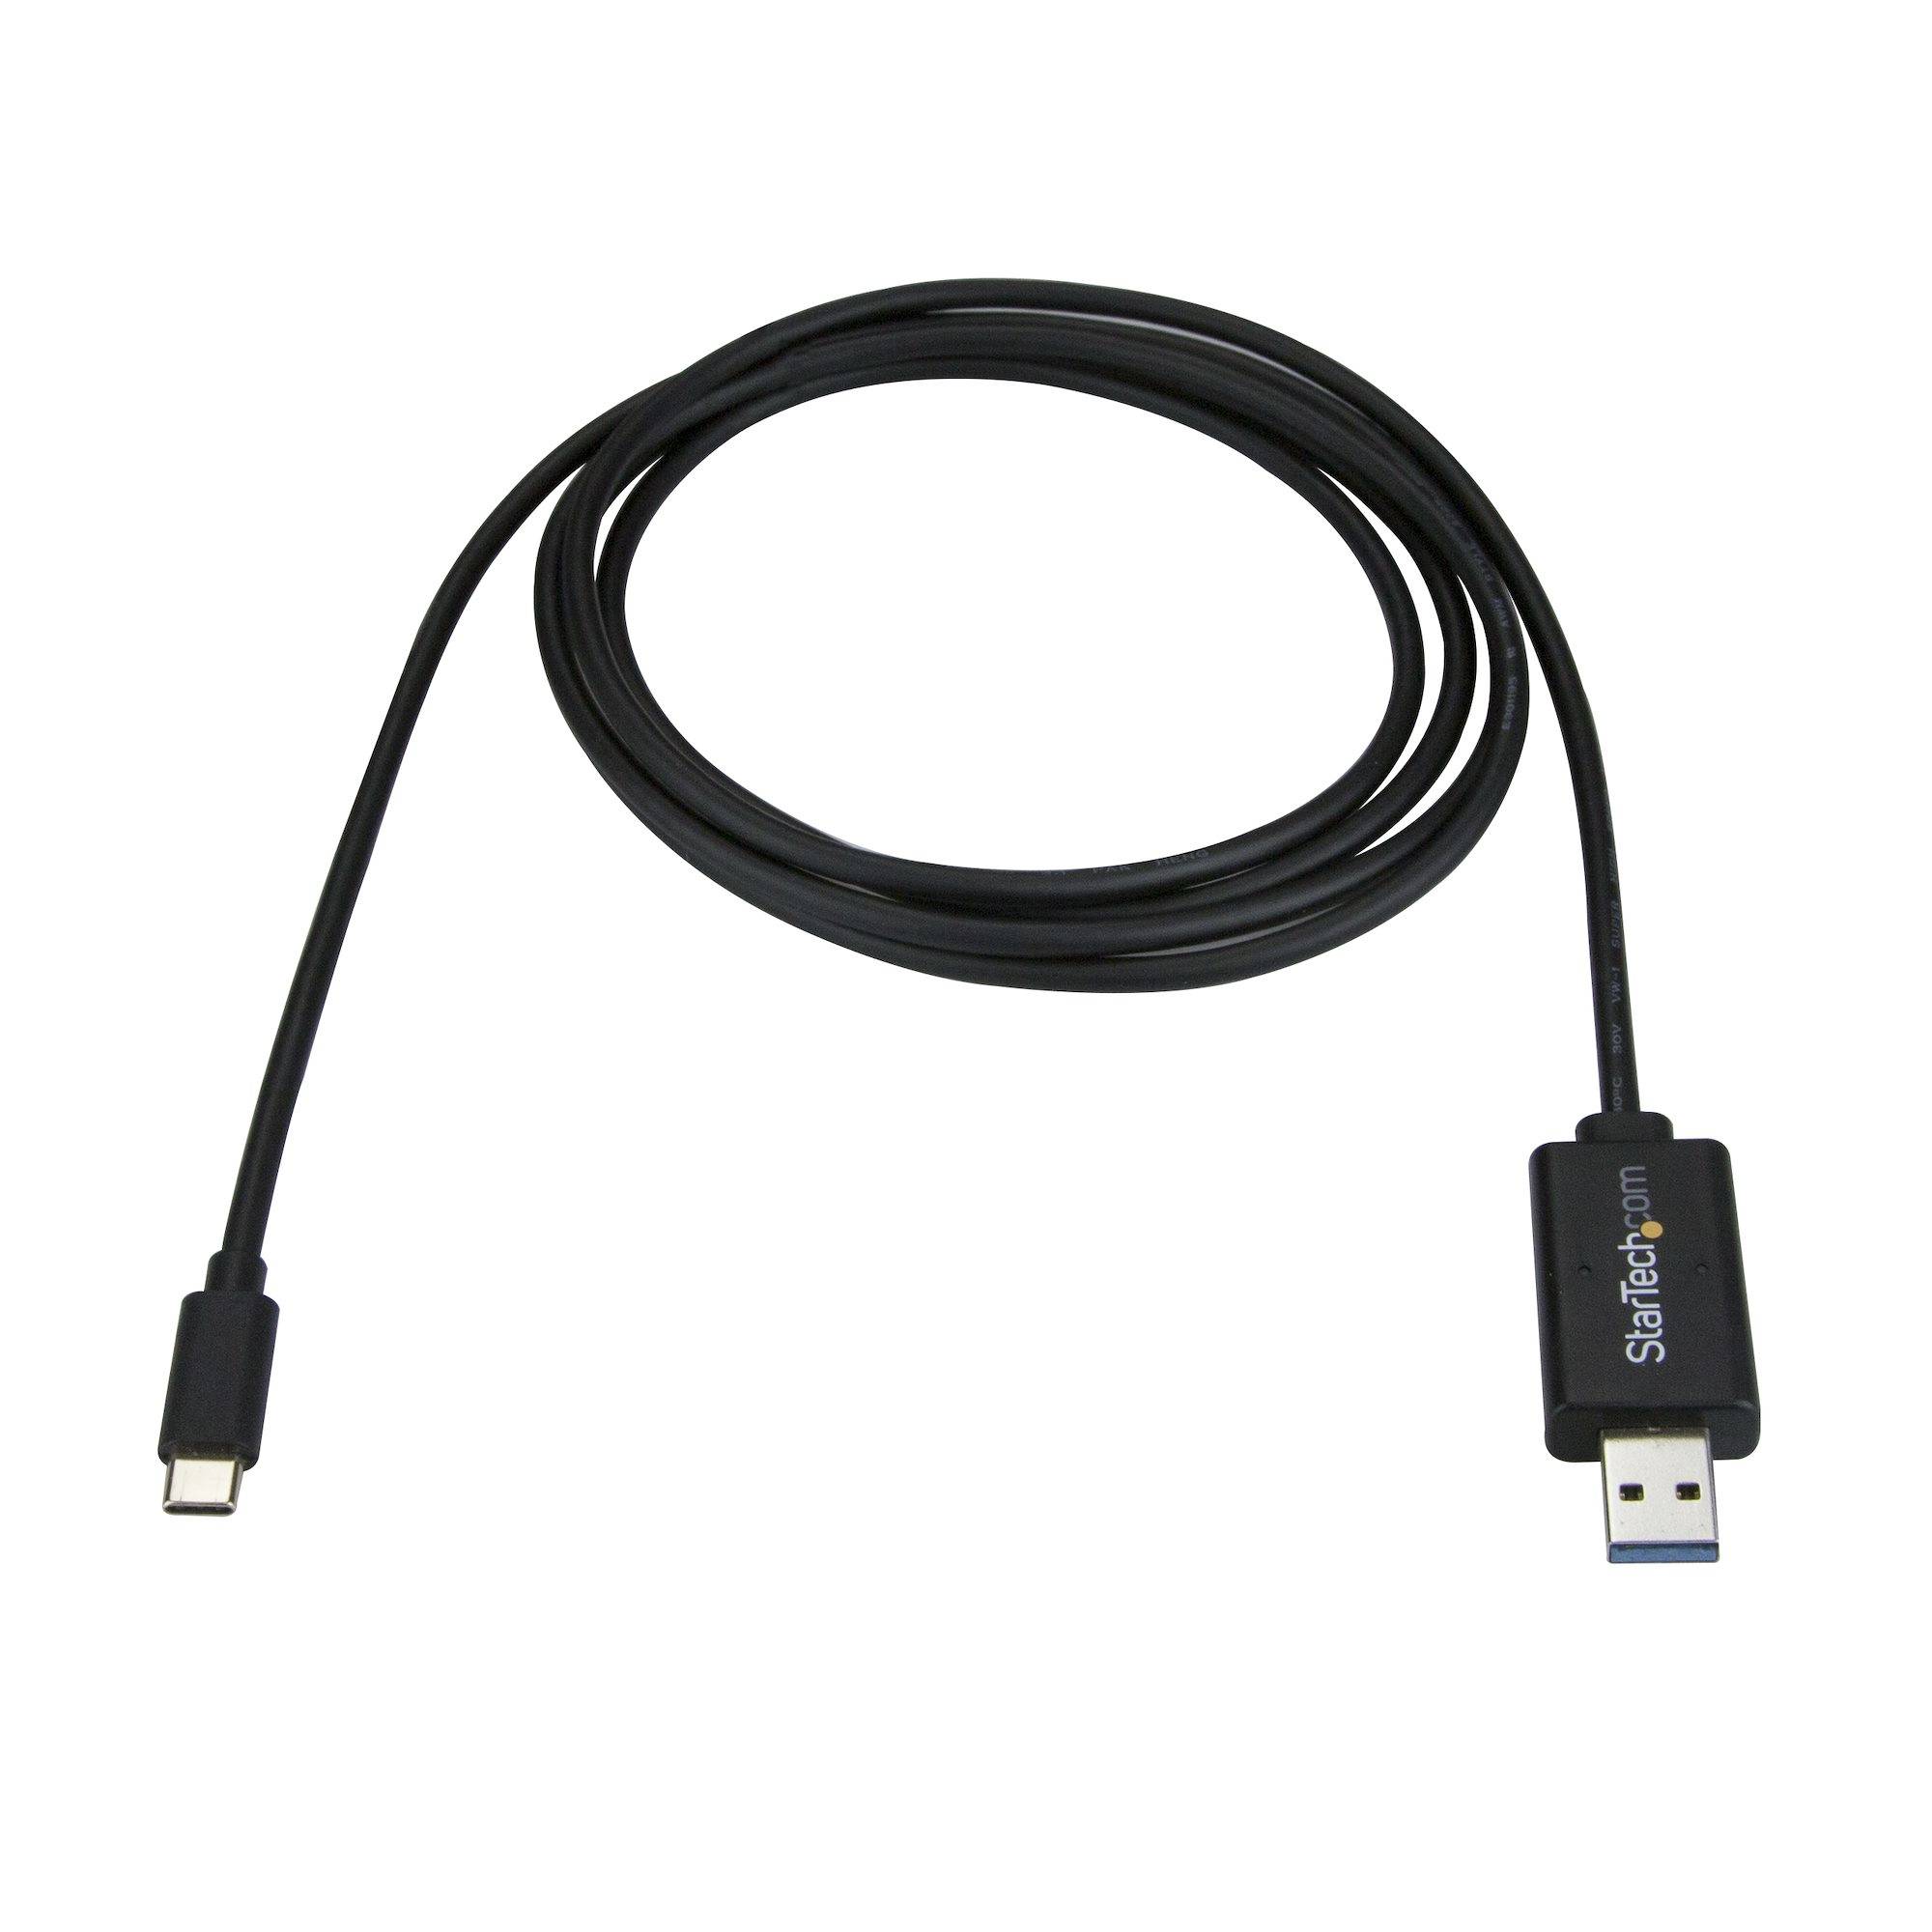 Rca Informatique - image du produit : USBC TO USB DATA TRANSFER CABLE MAC / WINDOWS - USB 3.0 (5GBPS)